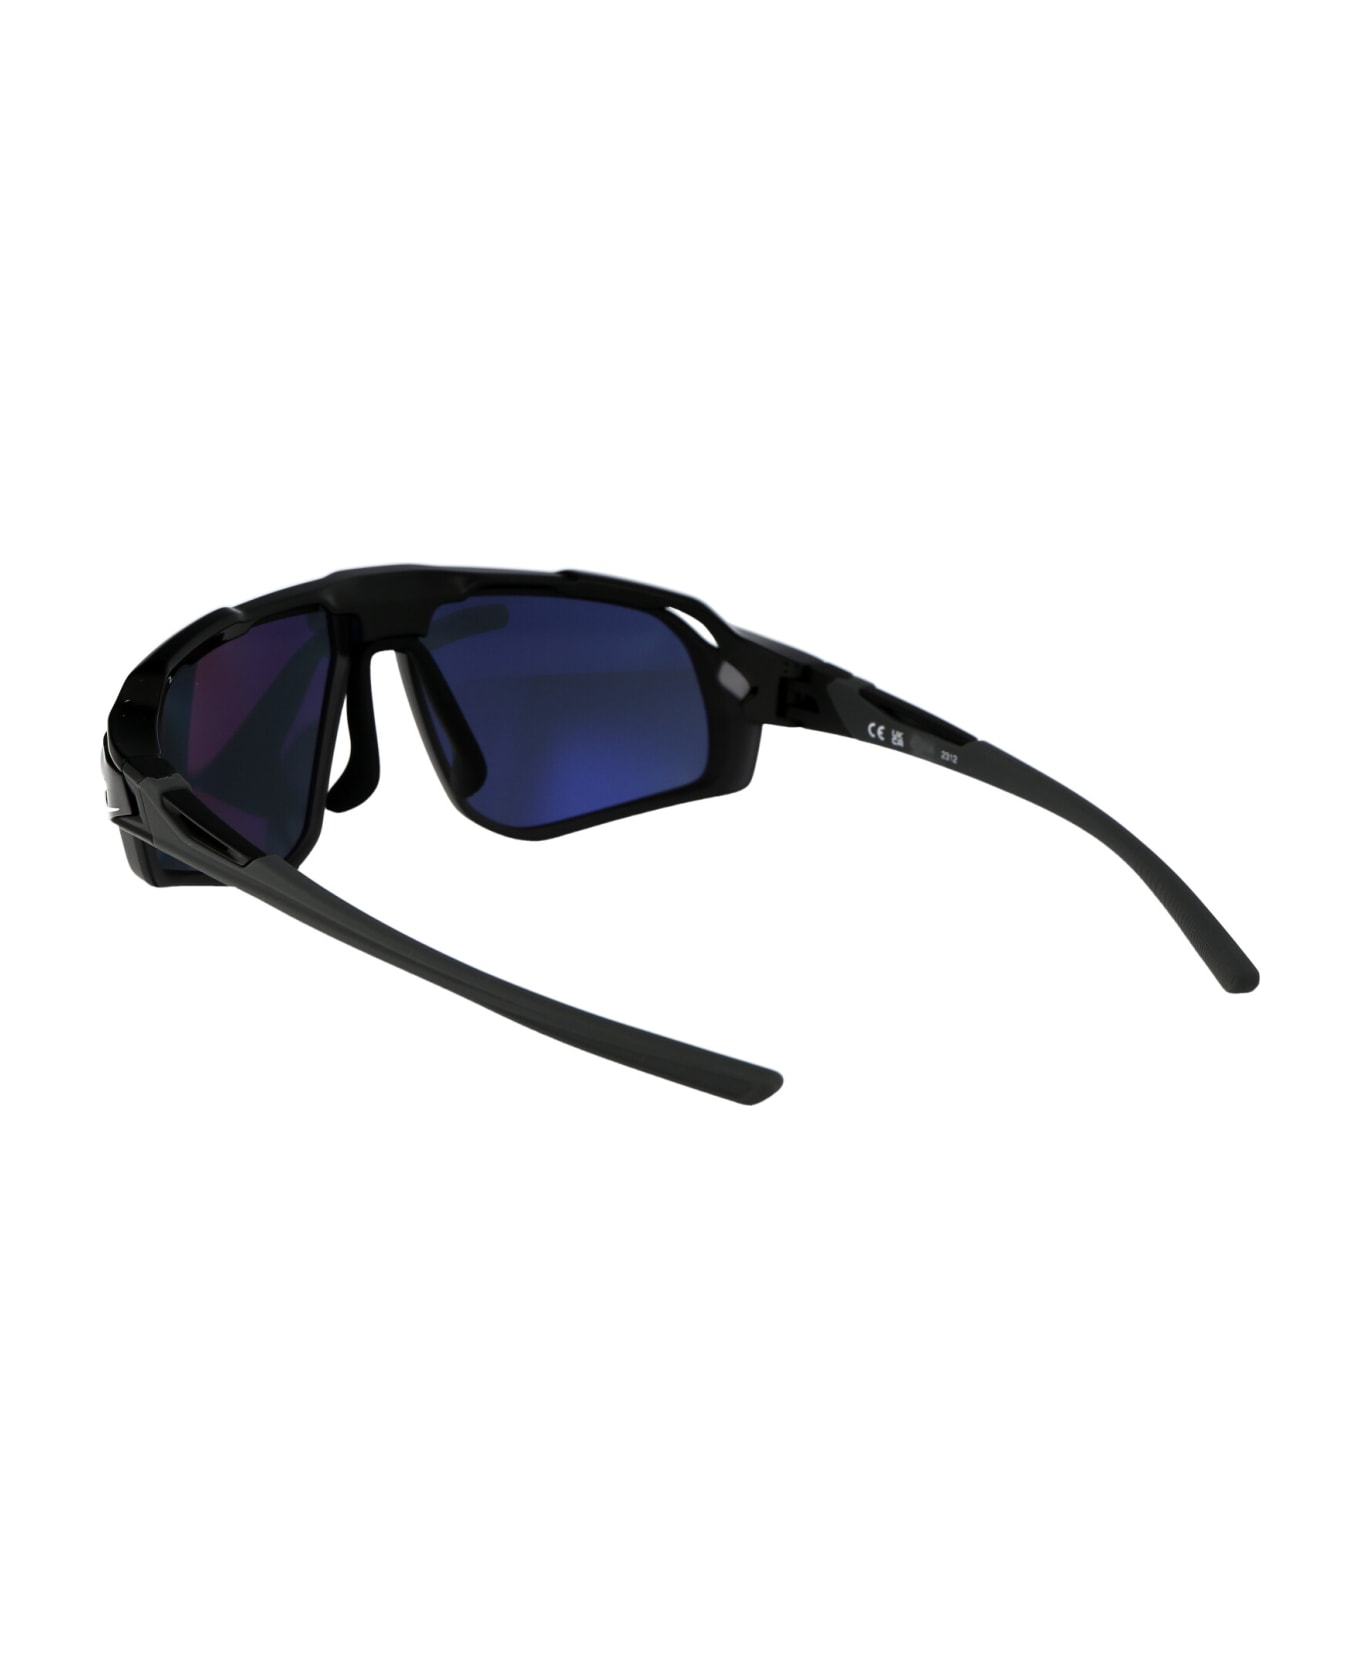 Nike Flyfree Sunglasses - 010 DARK GREY BLACK